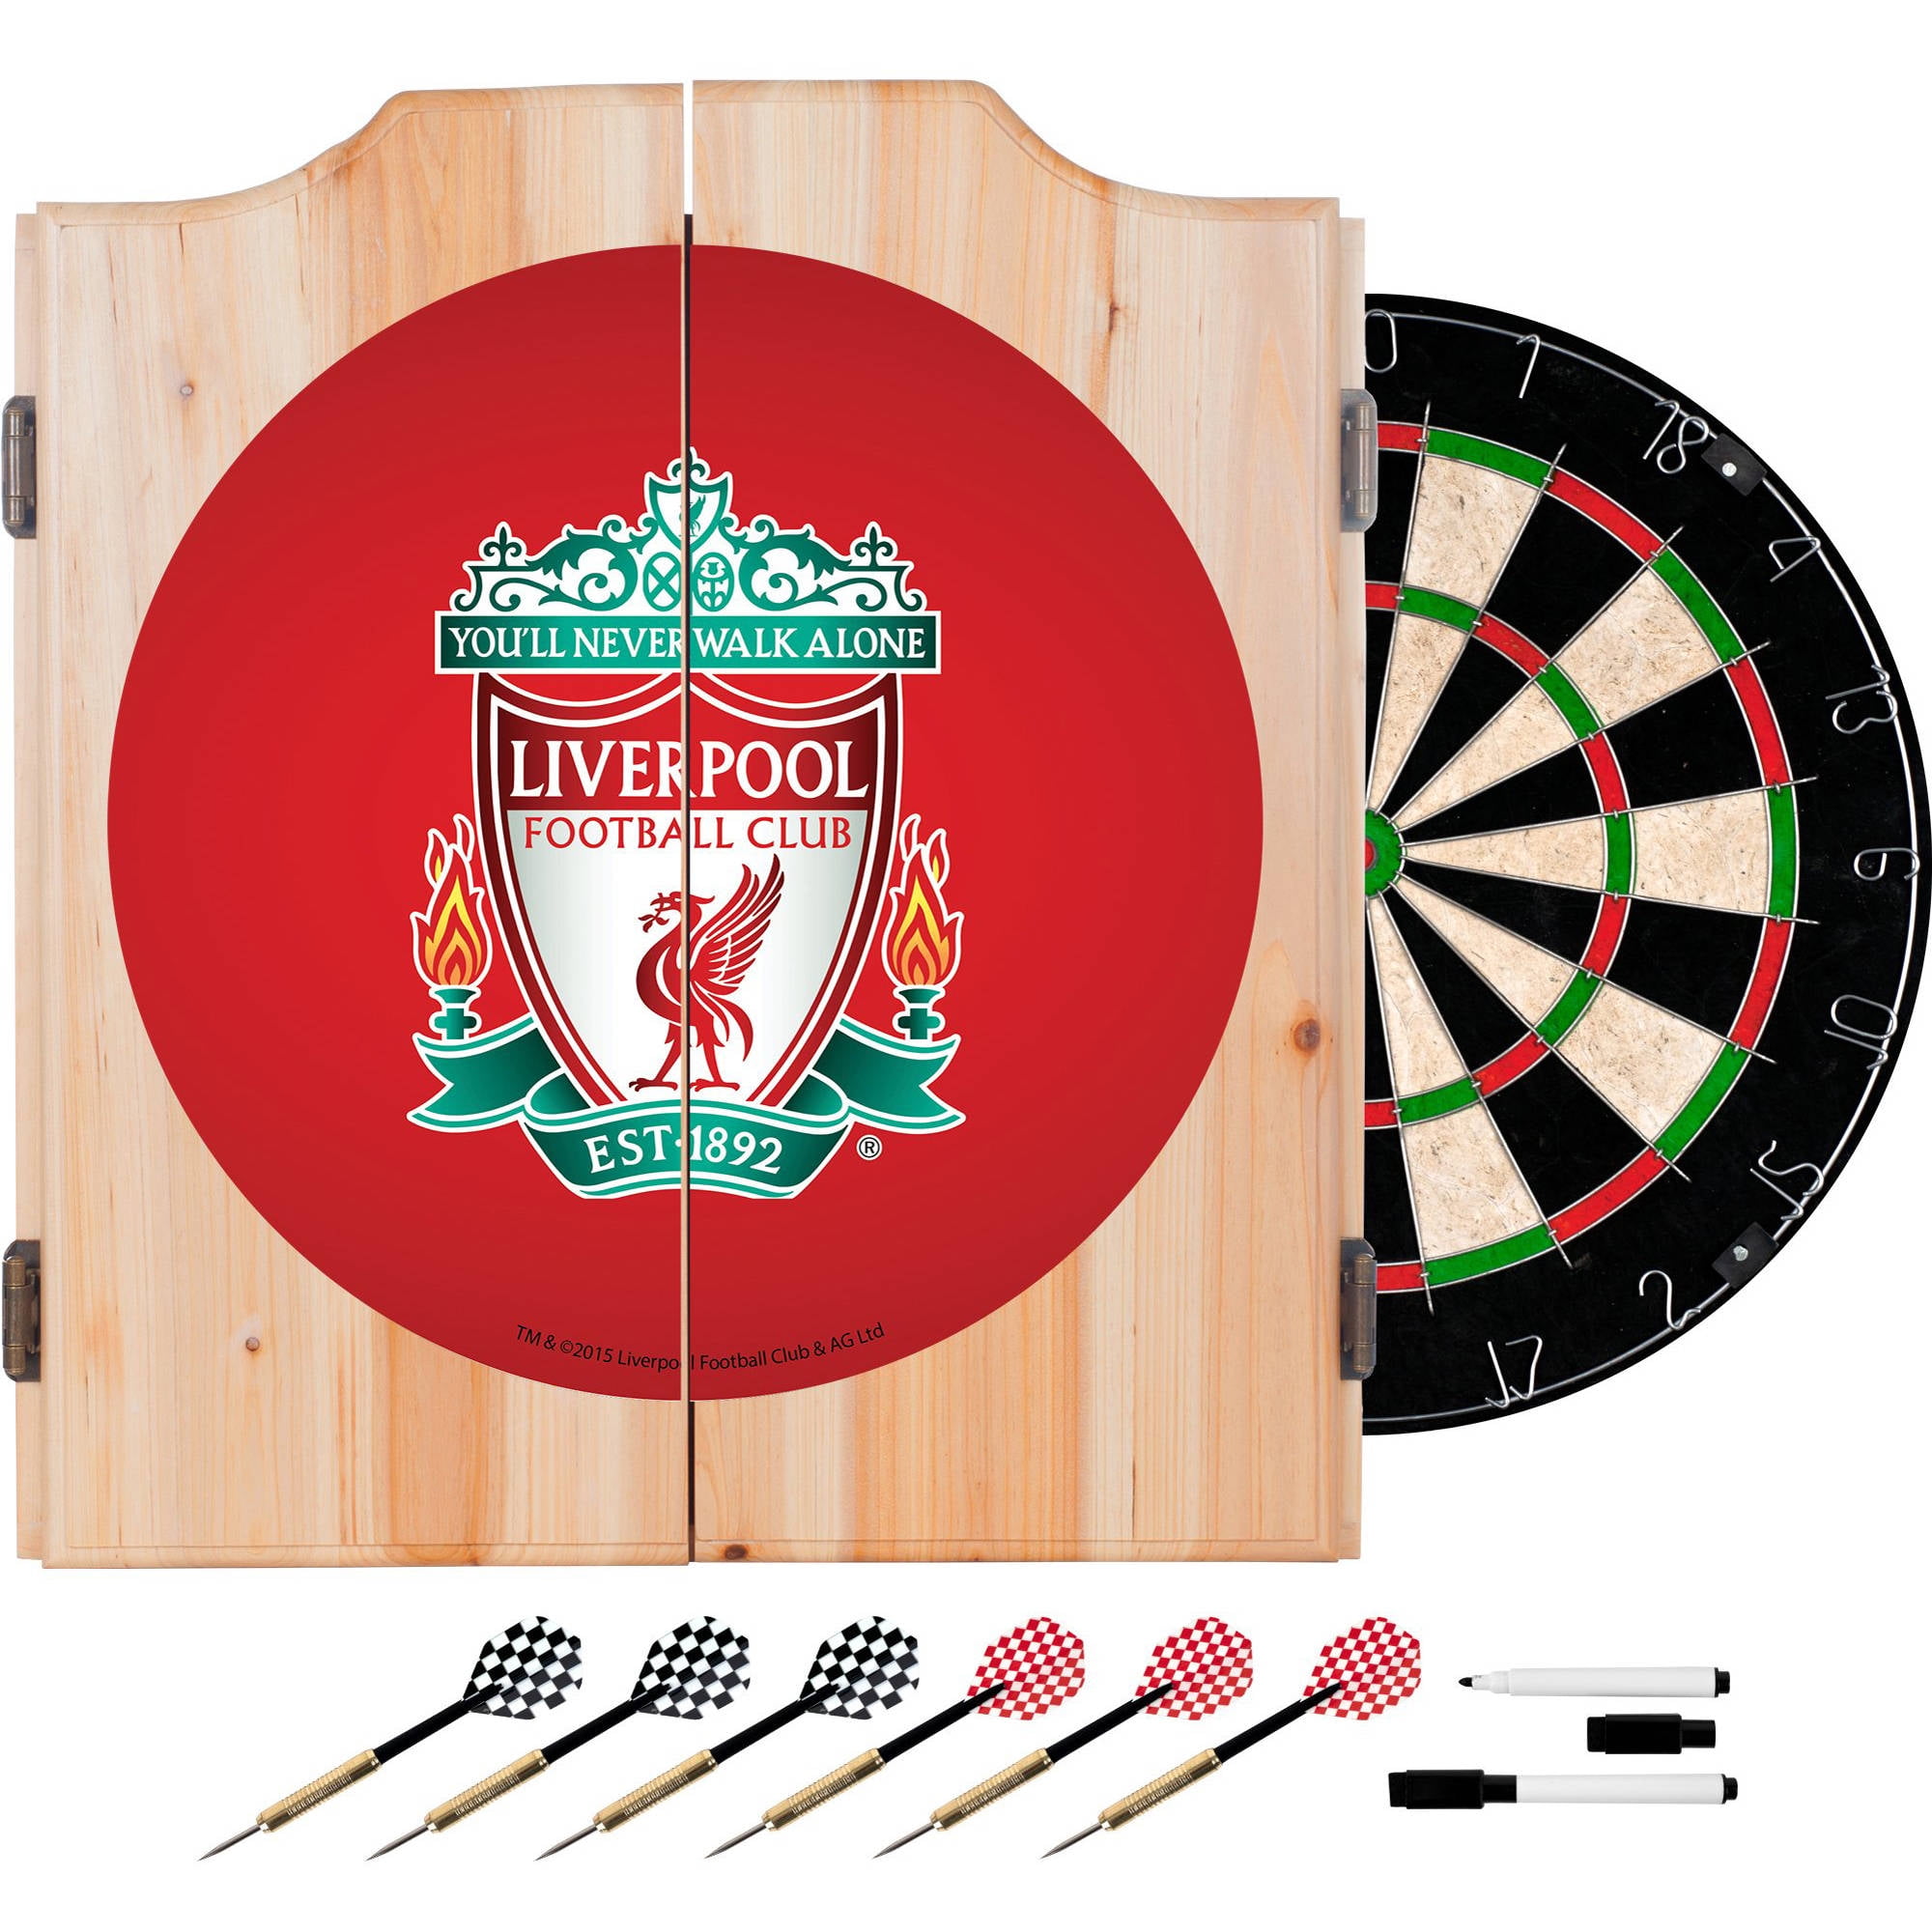 3 sets of Liverpool FC dart flights REDS